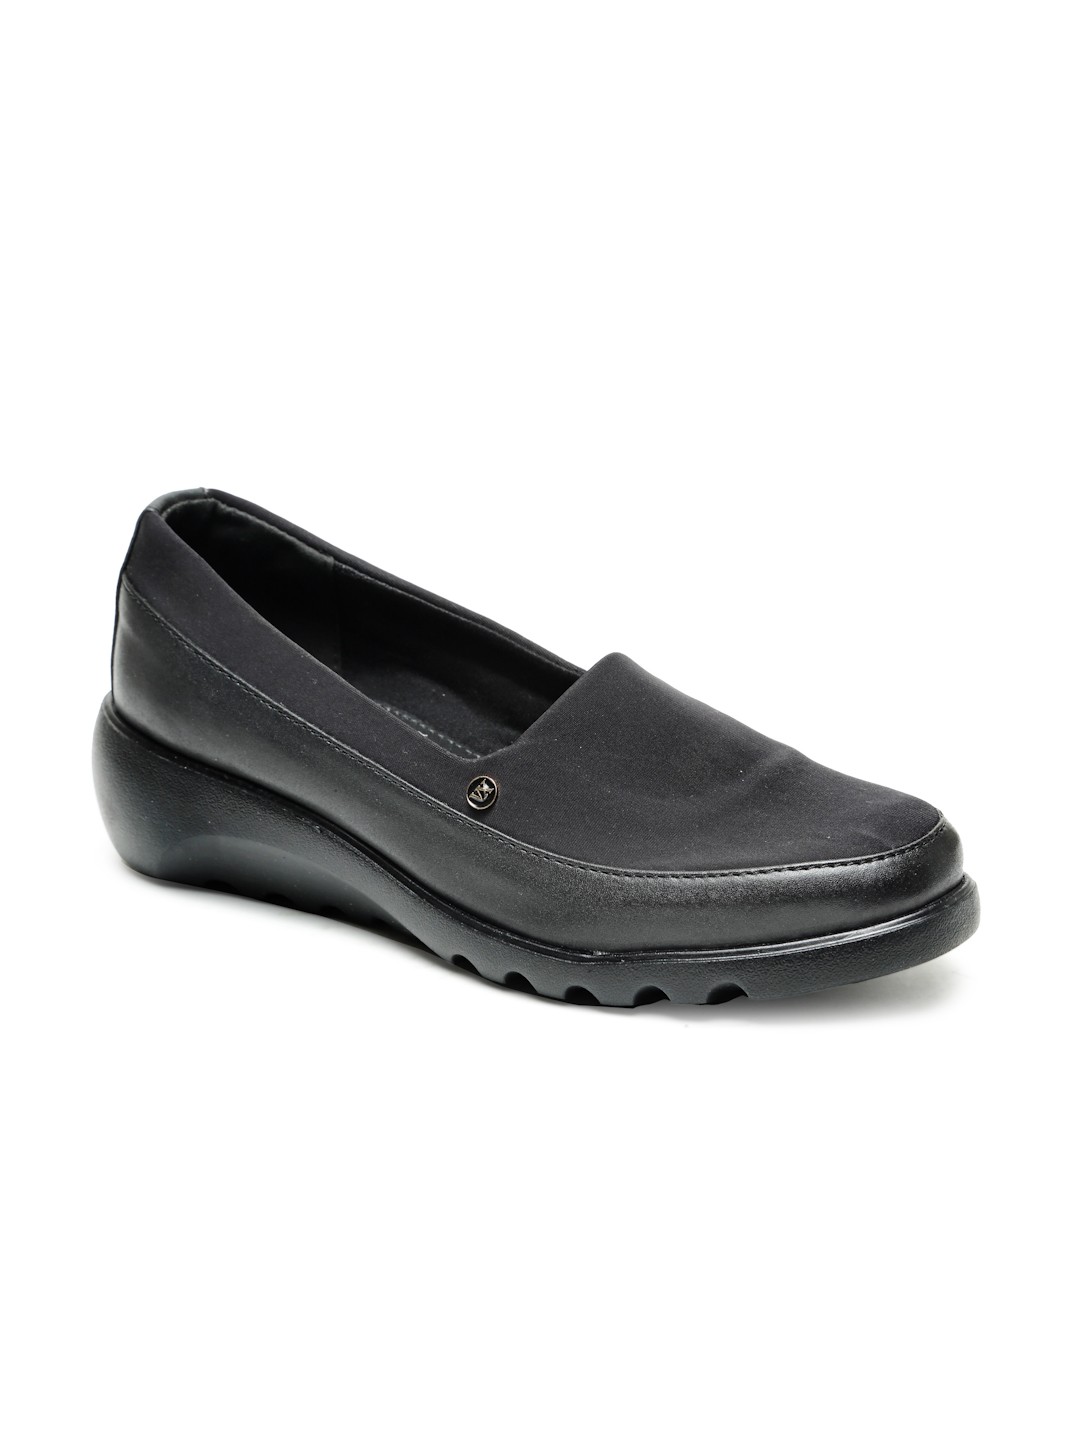 Buy Von Wellx Germany Comfort Women's Black Casual Shoes Elsa Online in Kolkata